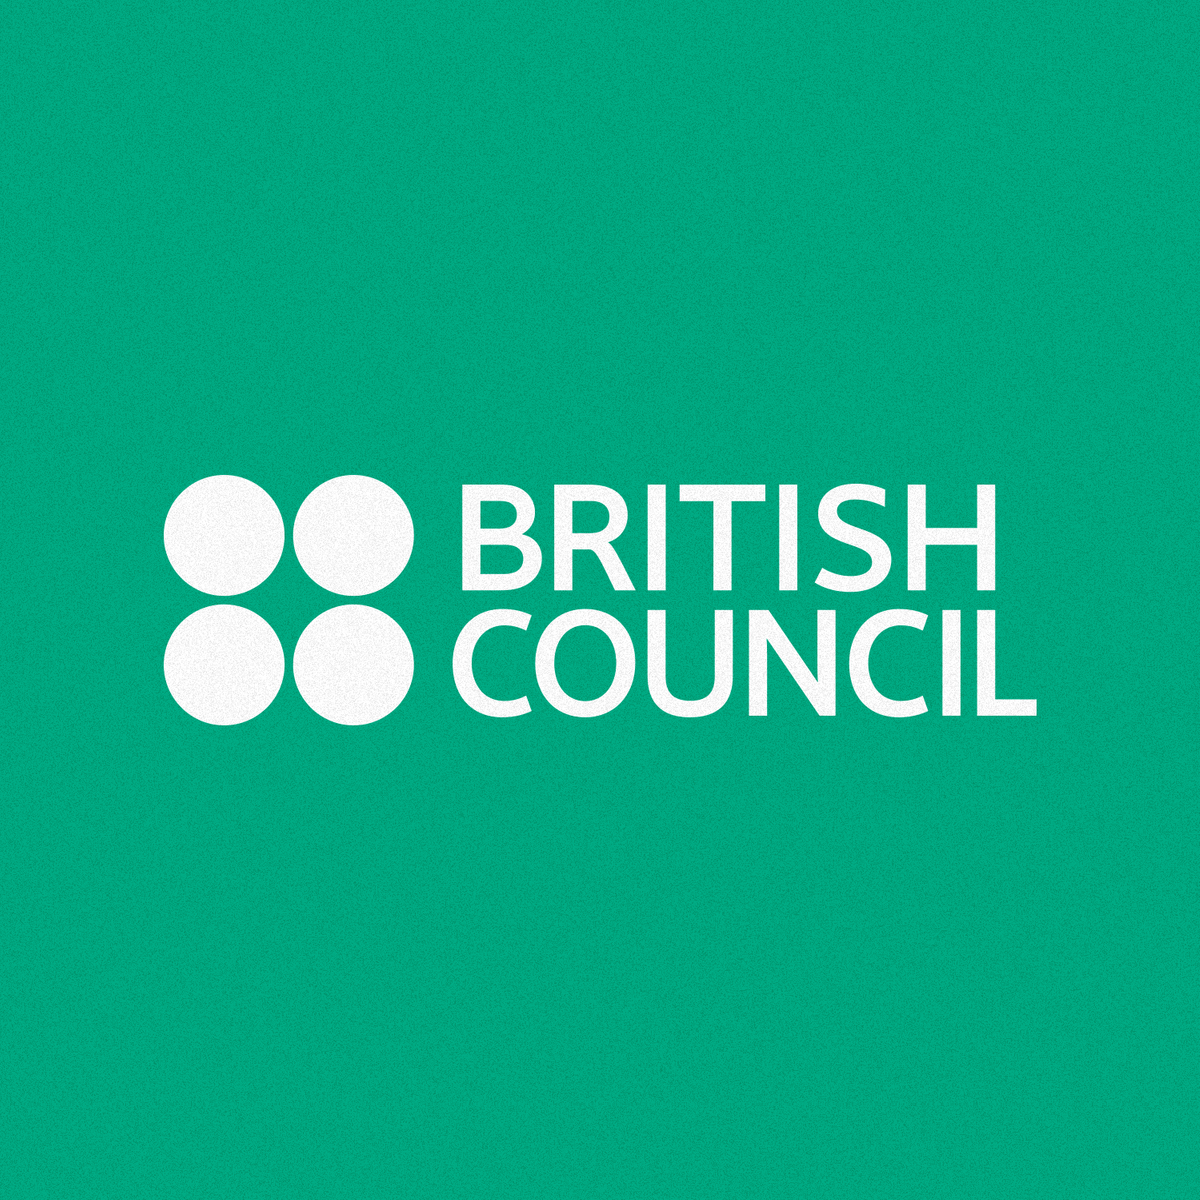 Https learnenglishteens britishcouncil org skills. British Council. British Council эмблема. British Council learn English. Британский совет.